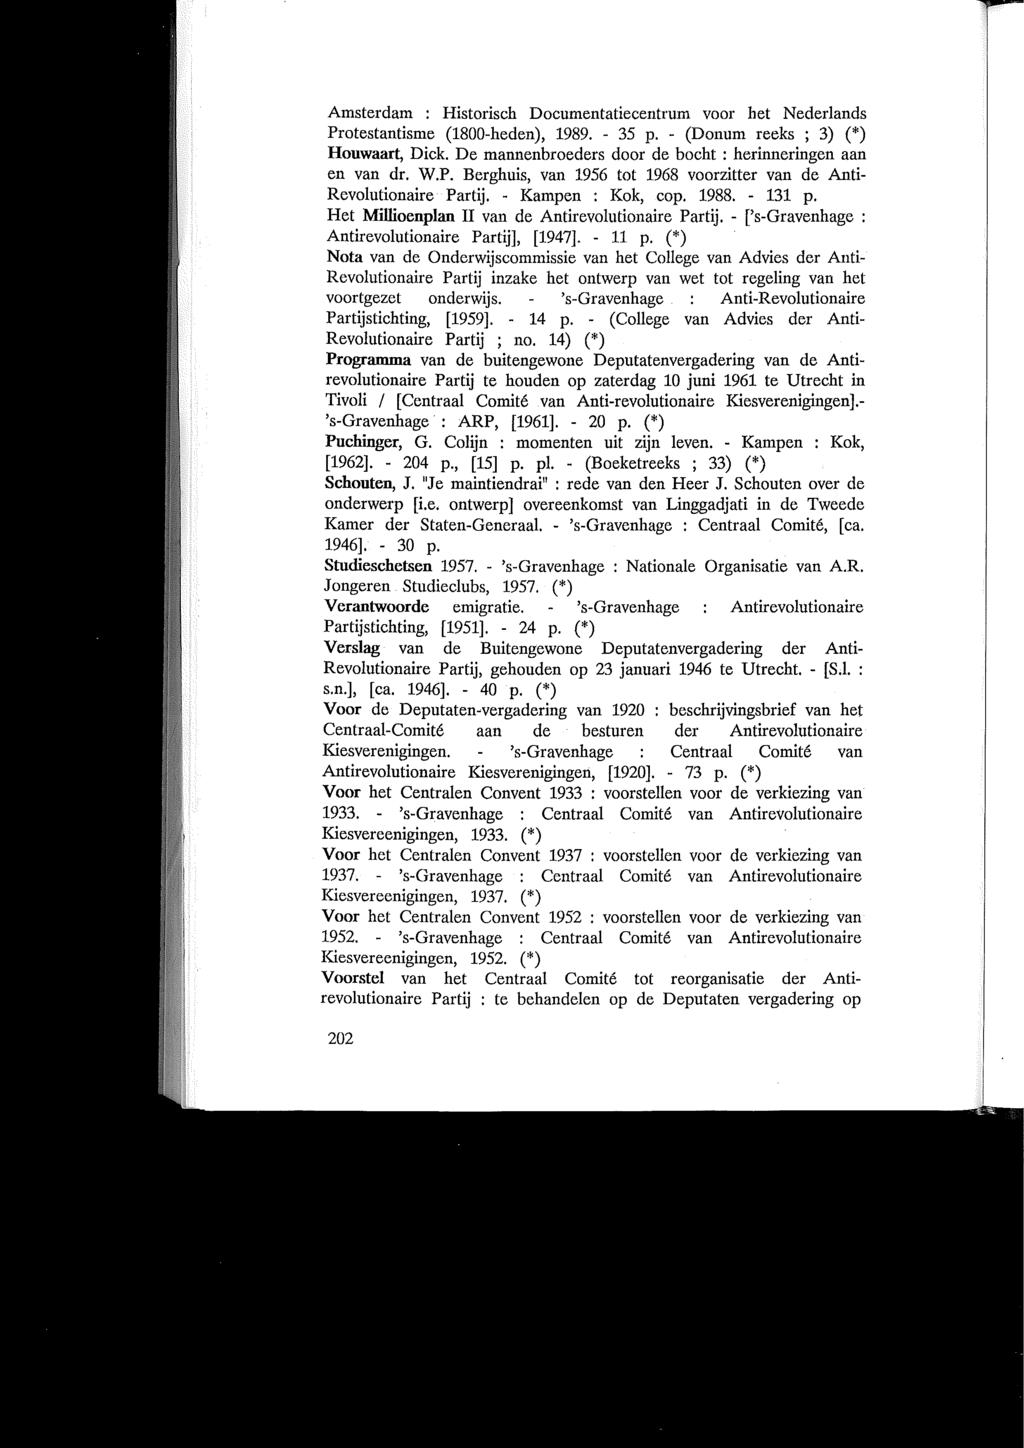 familie emotioneel streng Jaarboek Documentatiecentrum Nederlandse Politieke Partijen 1989 Voerman,  Gerrit; Lucardie, Anthonie - PDF Free Download